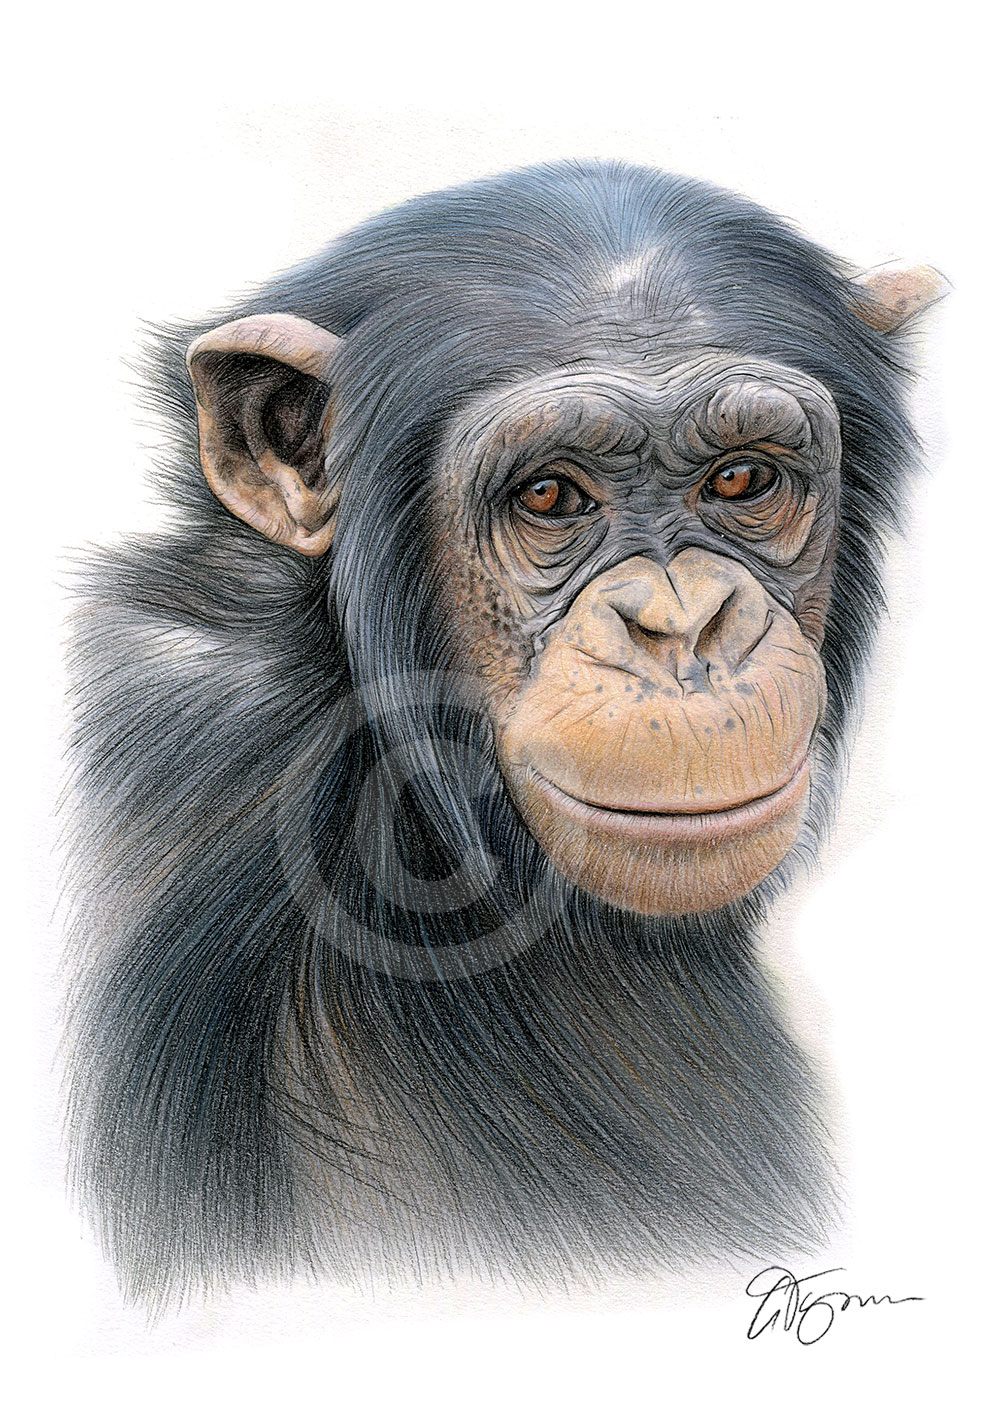 Colour pencil drawing of a chimpanzee by artist Gary Tymon